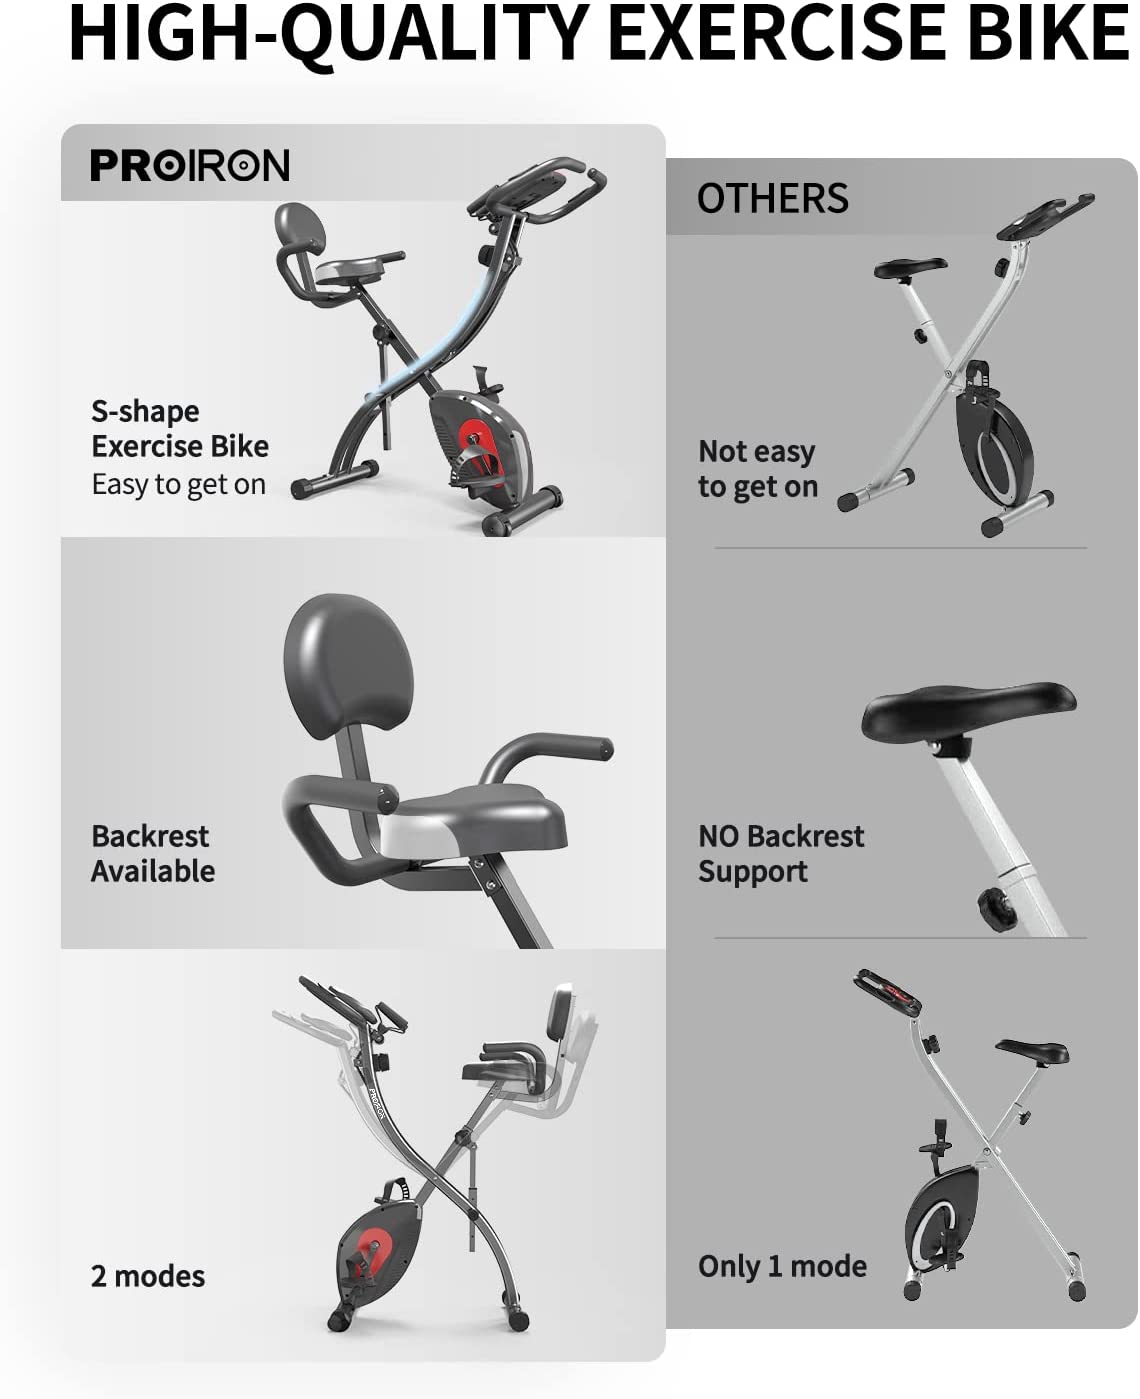 PROIRON 3-in-1 Folding Exercise Bike - product info 